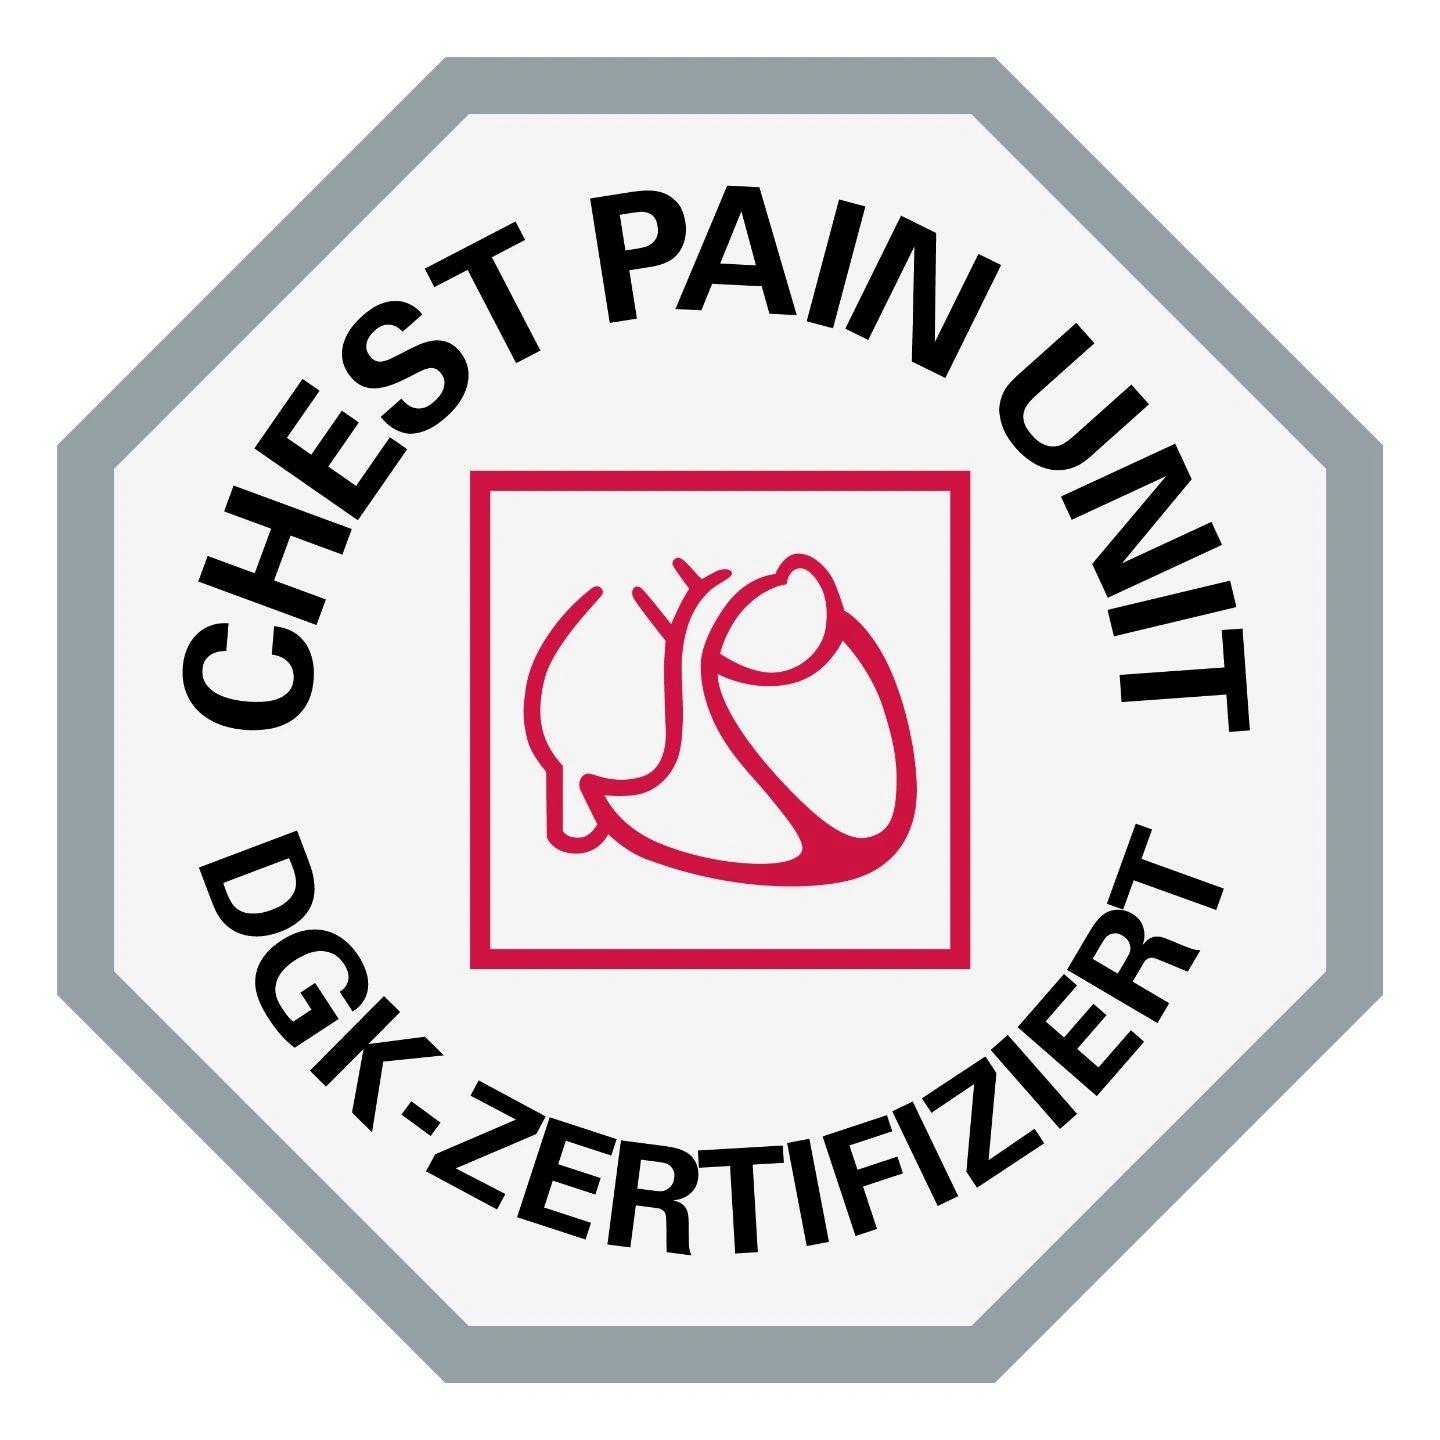 Bild: Zertifikat der Kardiologie als Chest-Pain-Unit